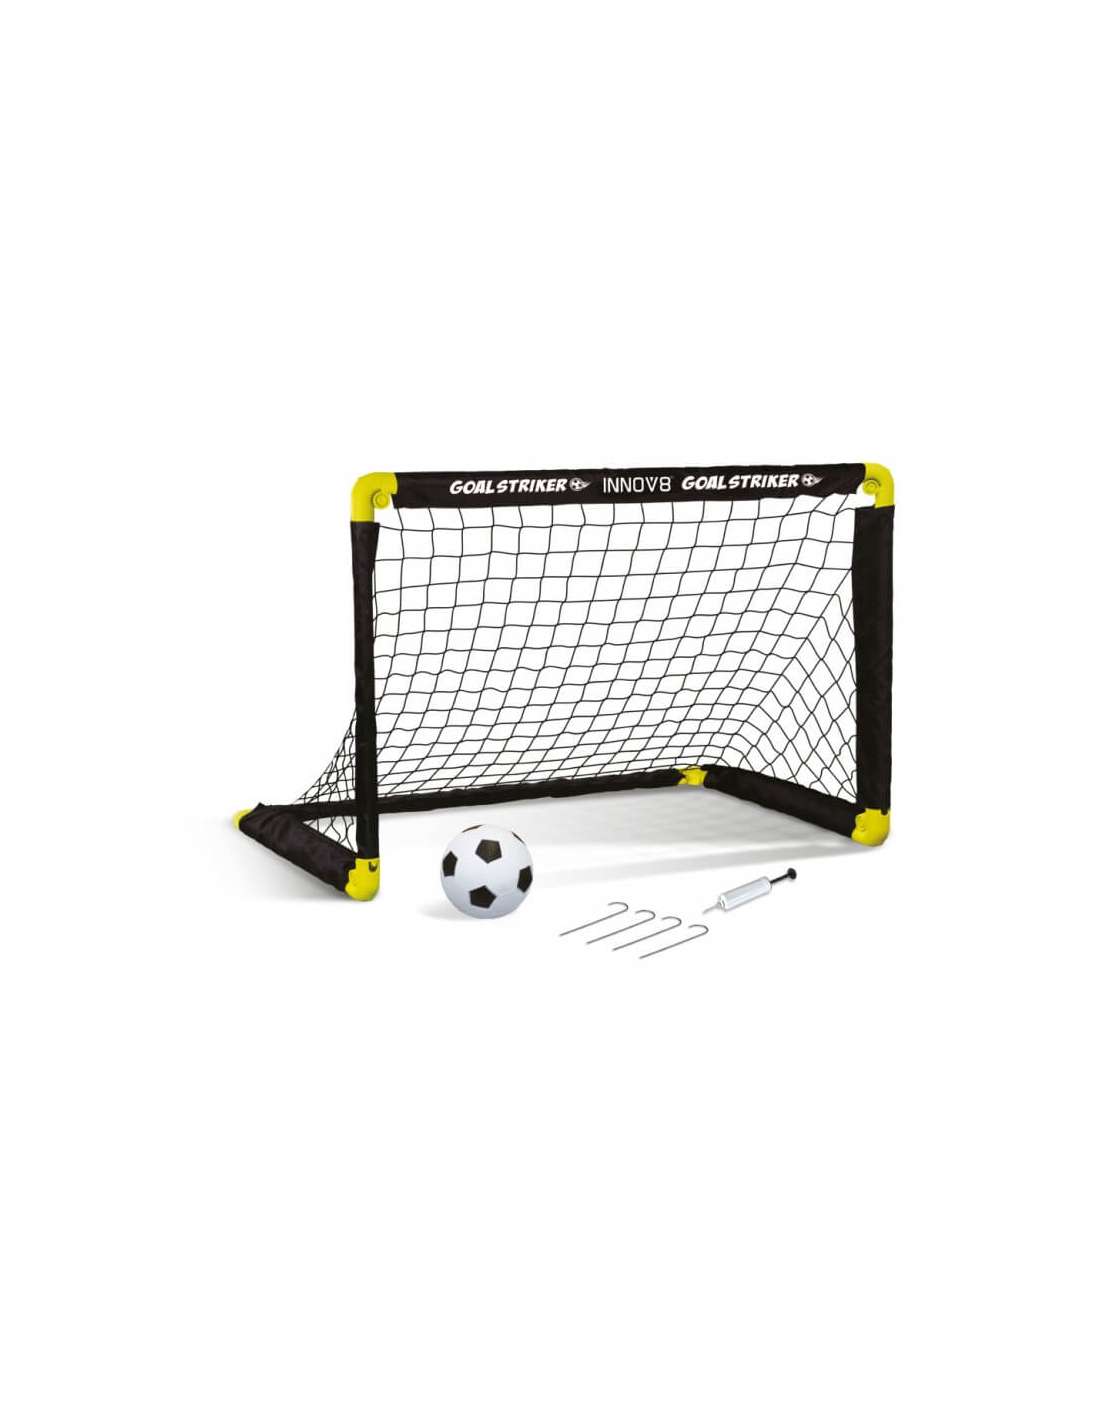 Portería de Fútbol Portátil Plegable Juguete de Fútbol Mini Jaula Fútbol  para Actividades al en Interiores 106CM Macarena Kit de portería de fútbol  para niños